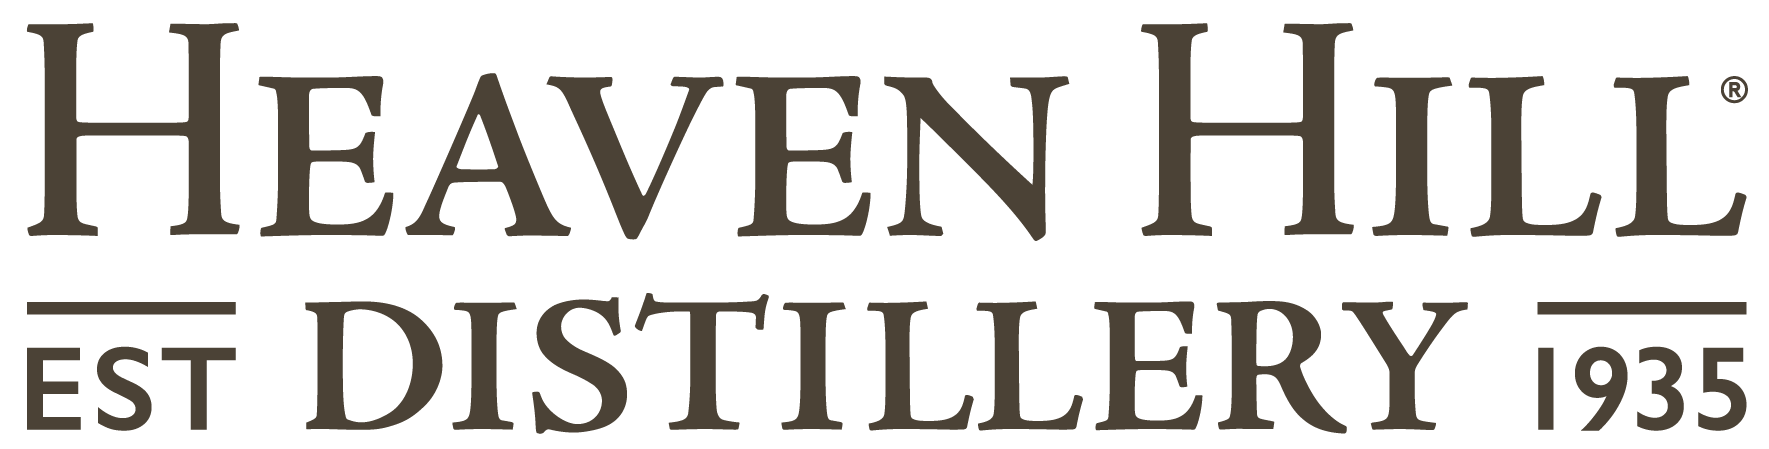 Heaven Hill logo.png